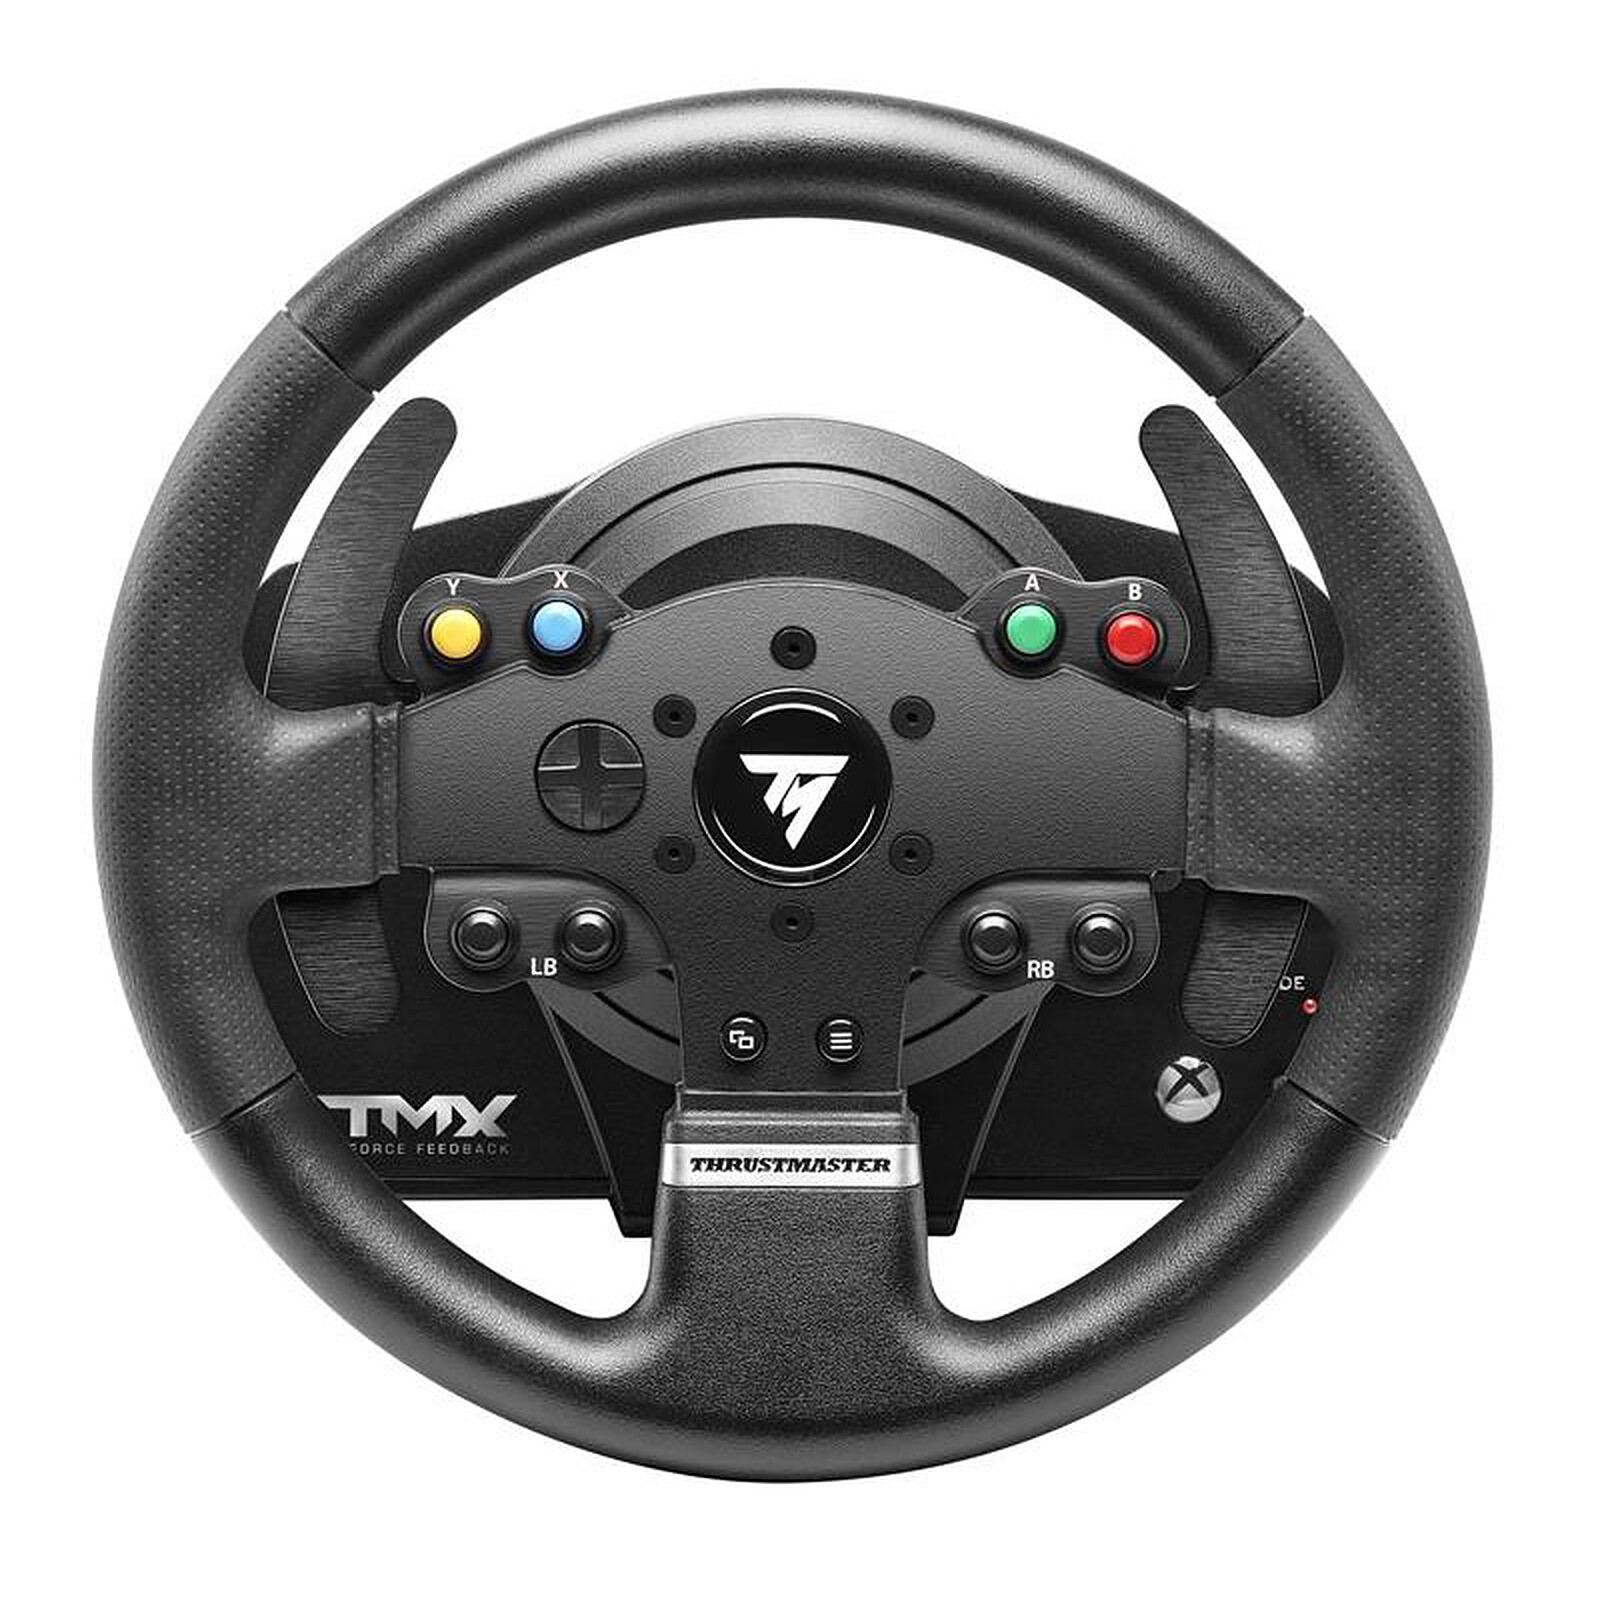 Thrustmaster T248 - PC game racing wheel - LDLC 3-year warranty